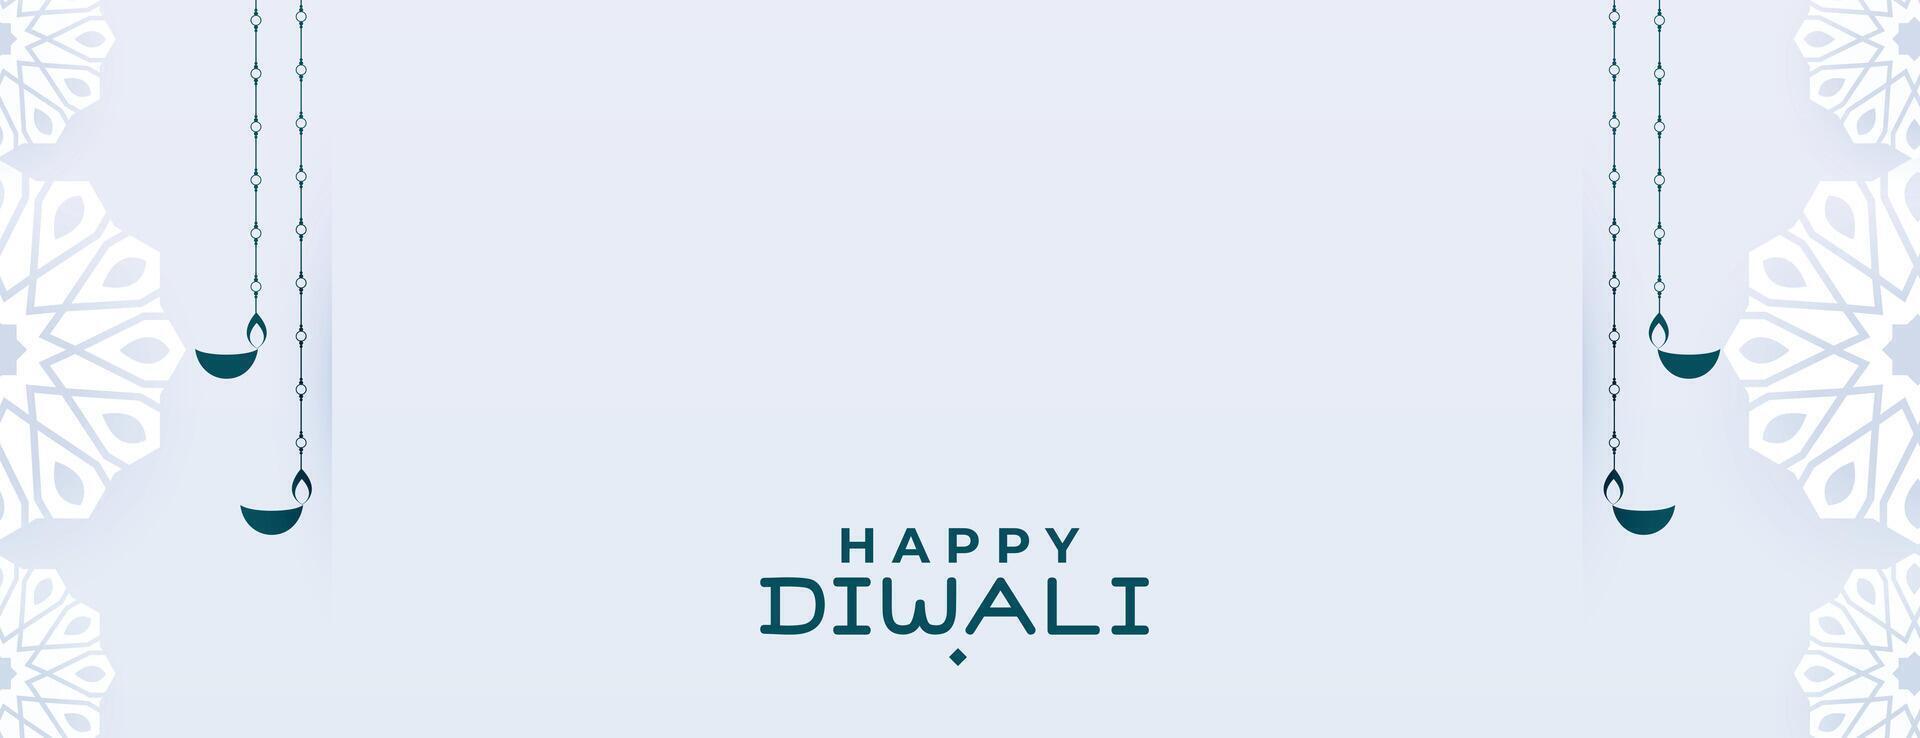 minimal happy diwali event banner with hanging diya design vector